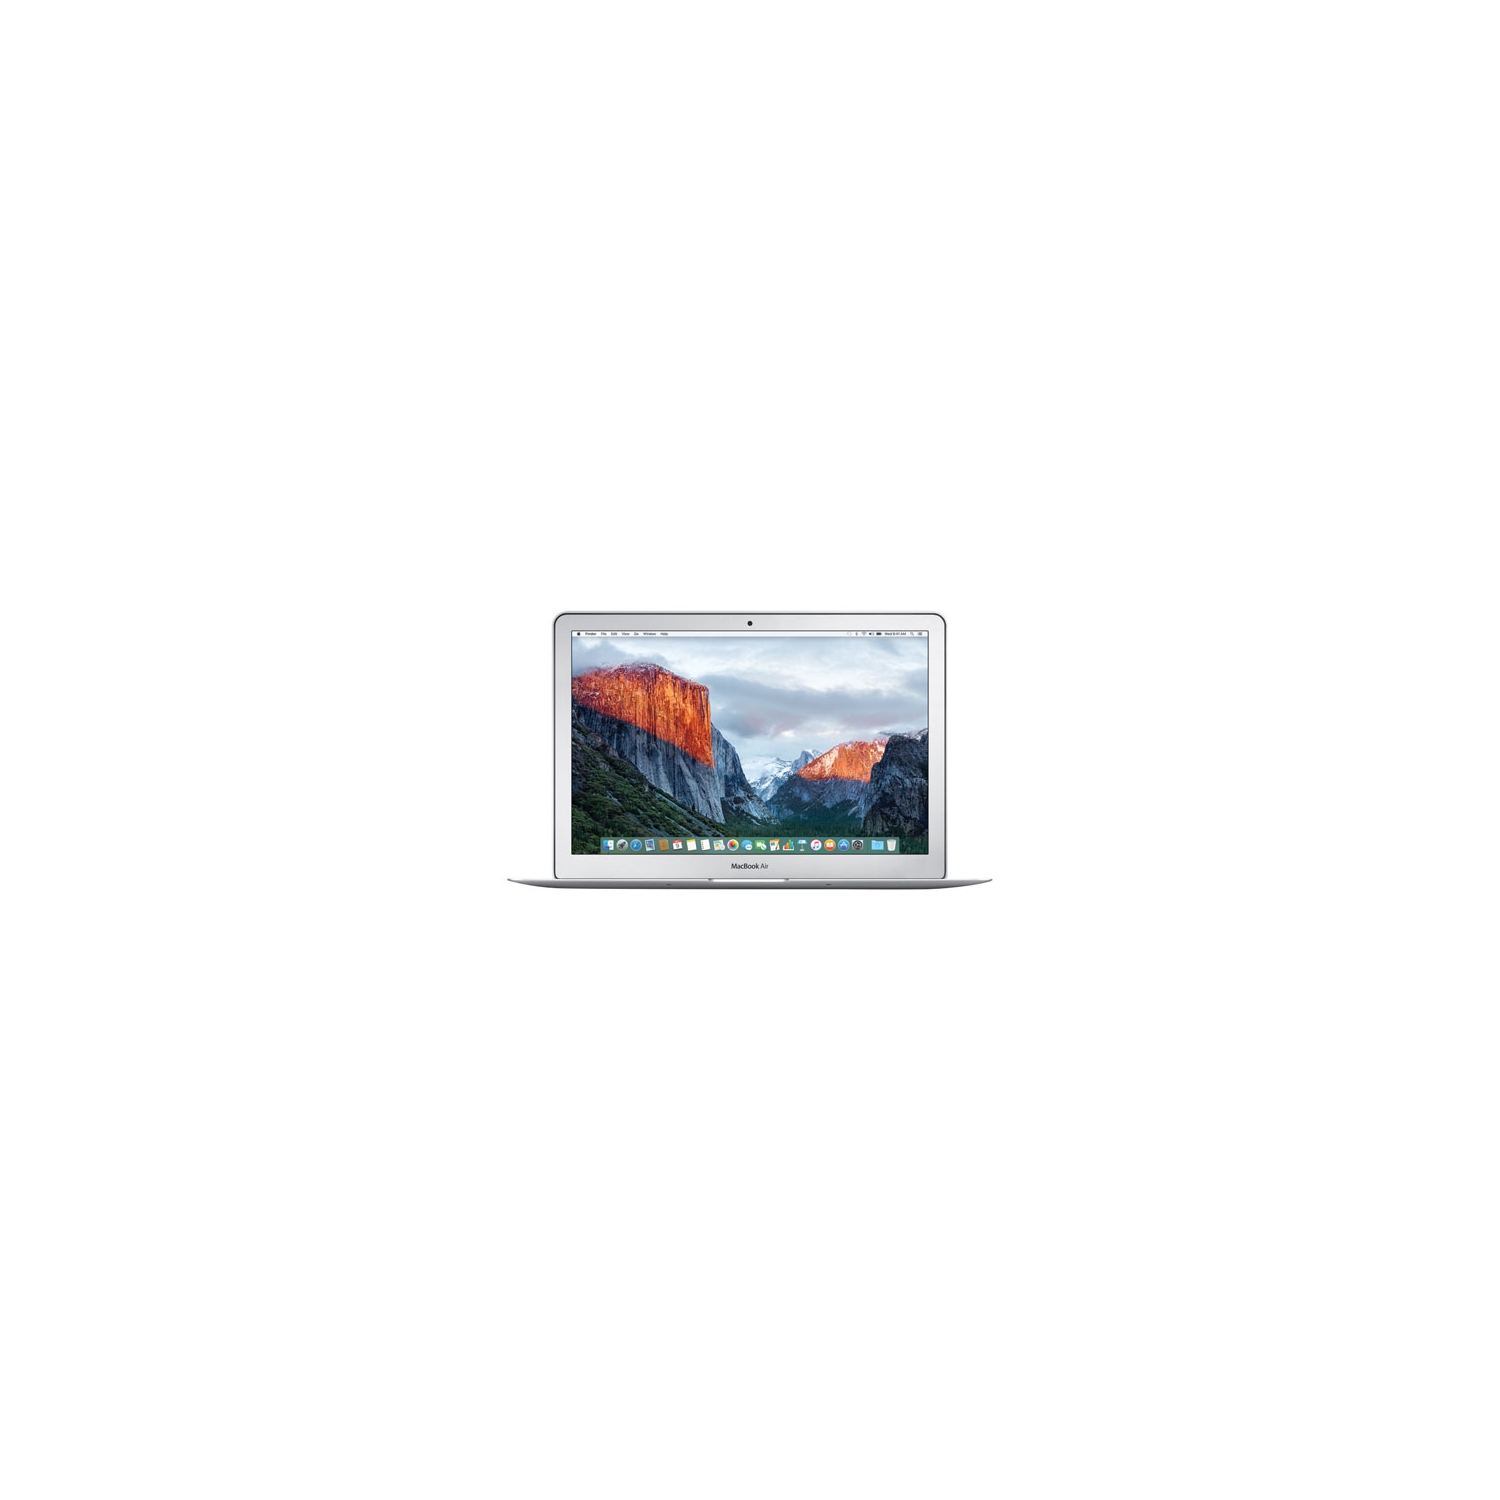 Refurbished (Good) - Apple MacBook Air 13" (2015) Dual-Core Intel Core i5 1.6GHz Laptop - English